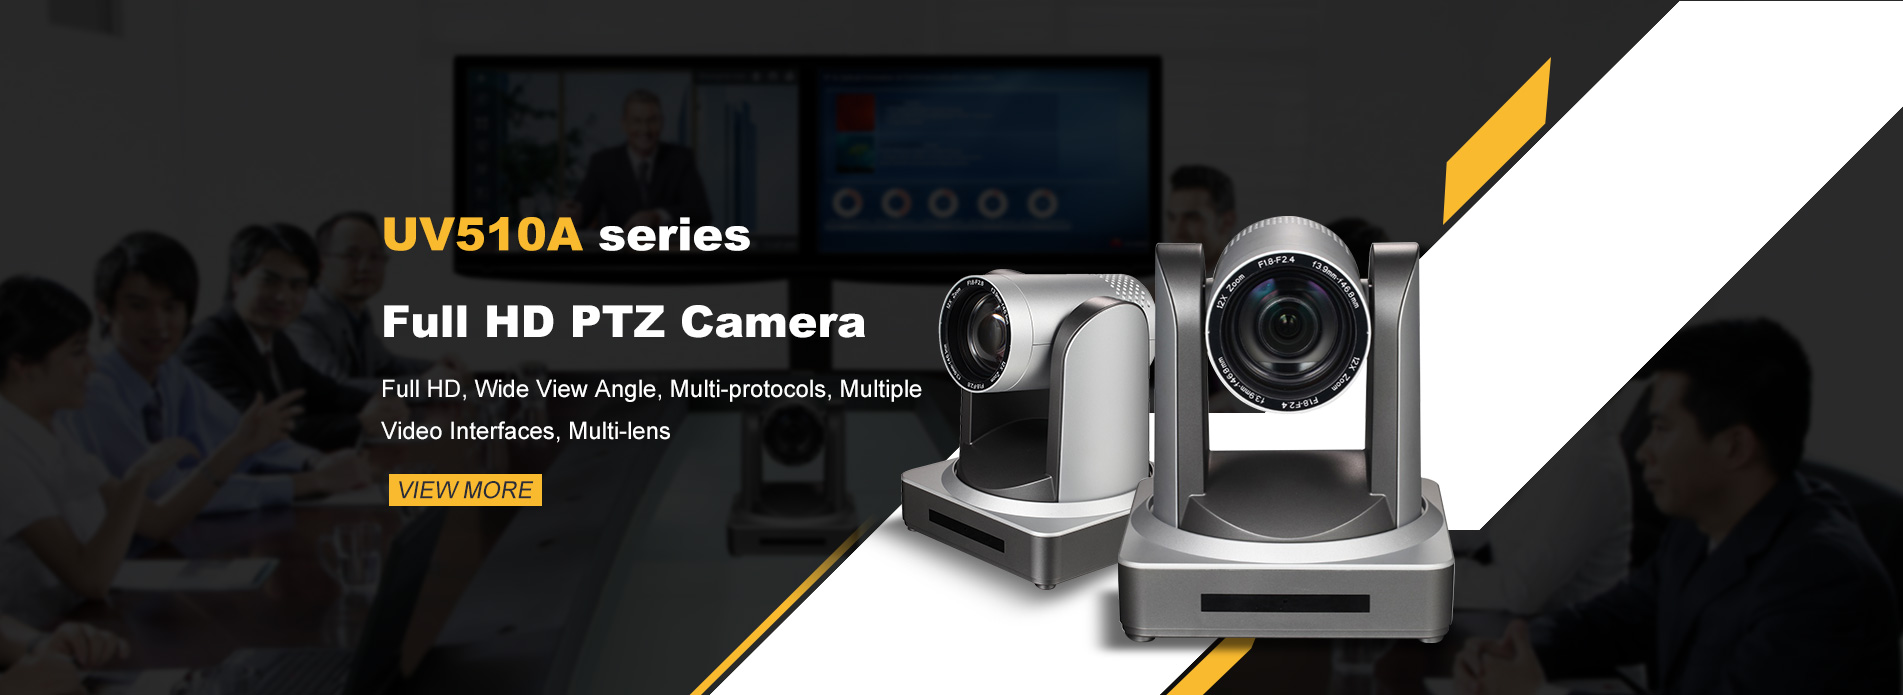 PTZ Camera